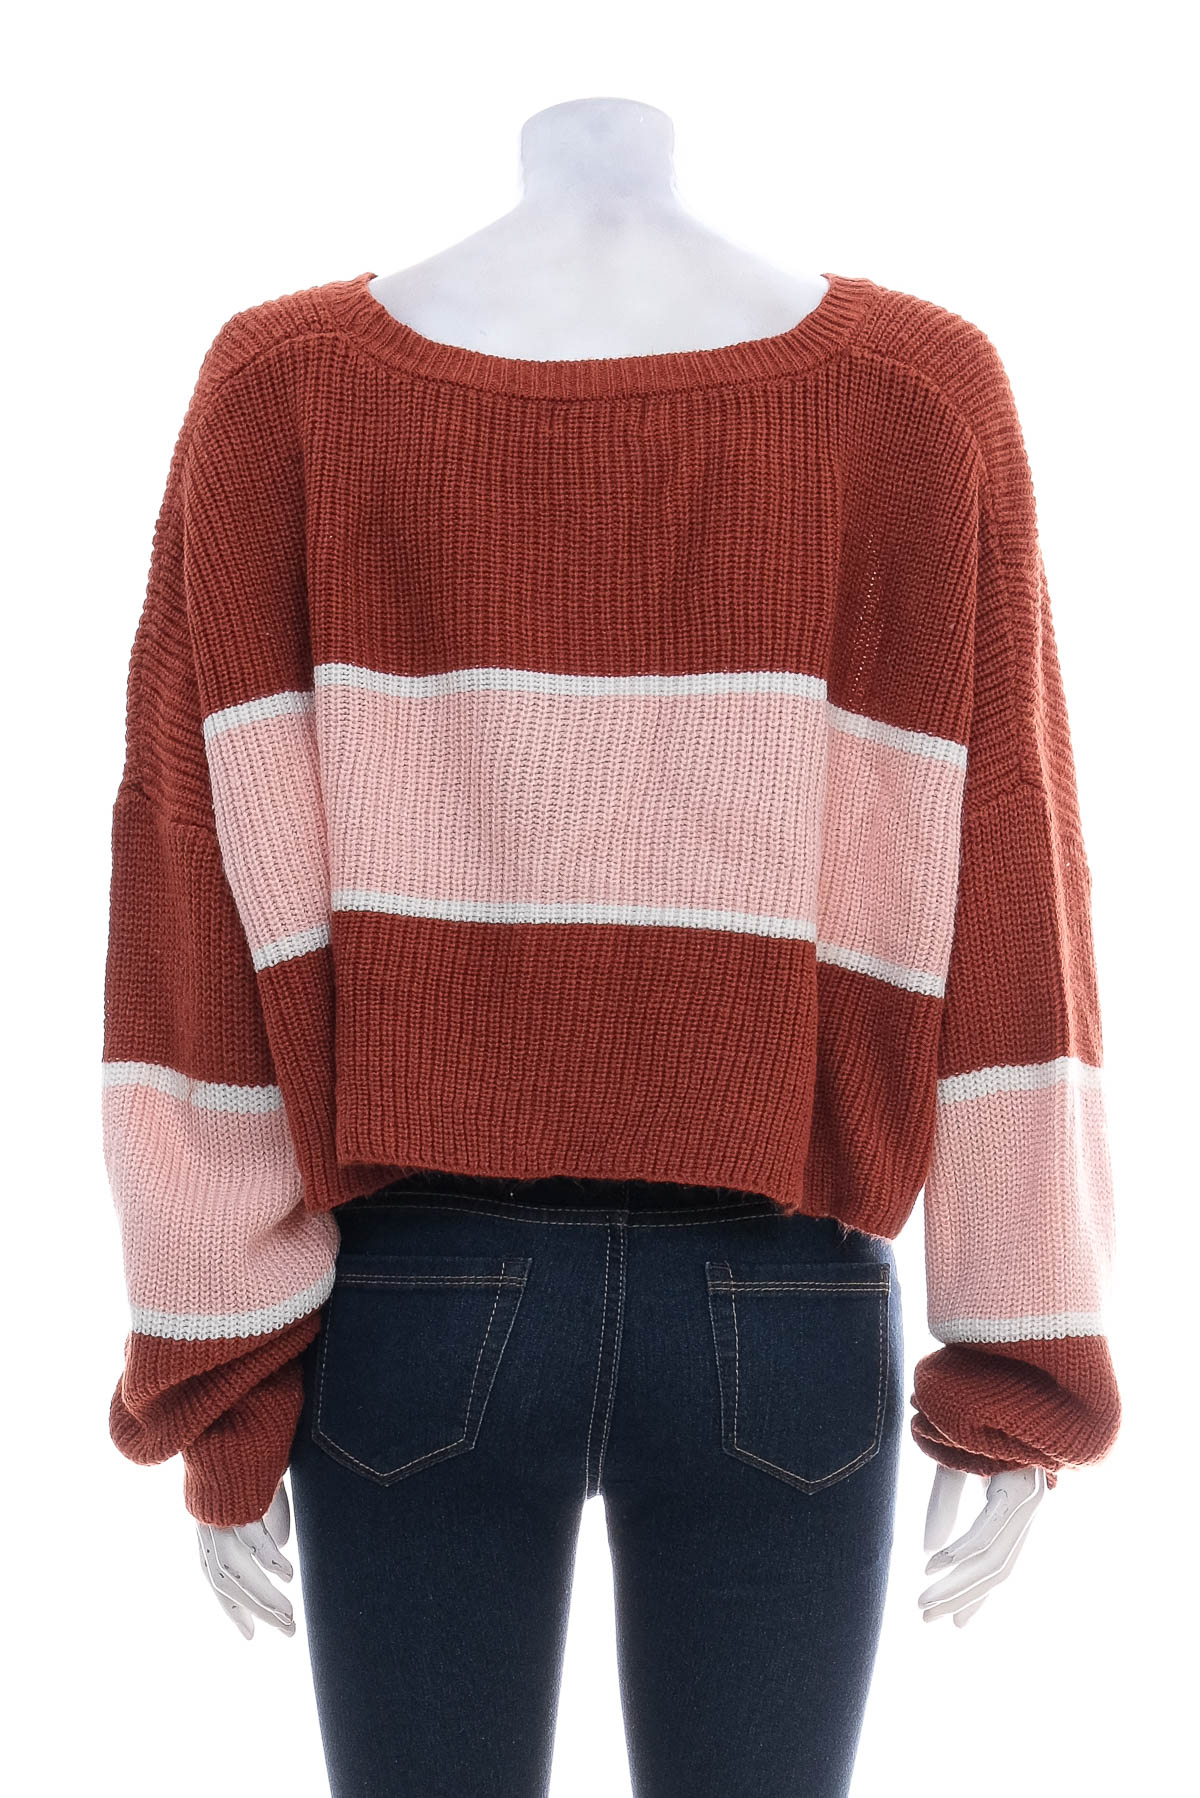 Women's sweater - MiSC - 1